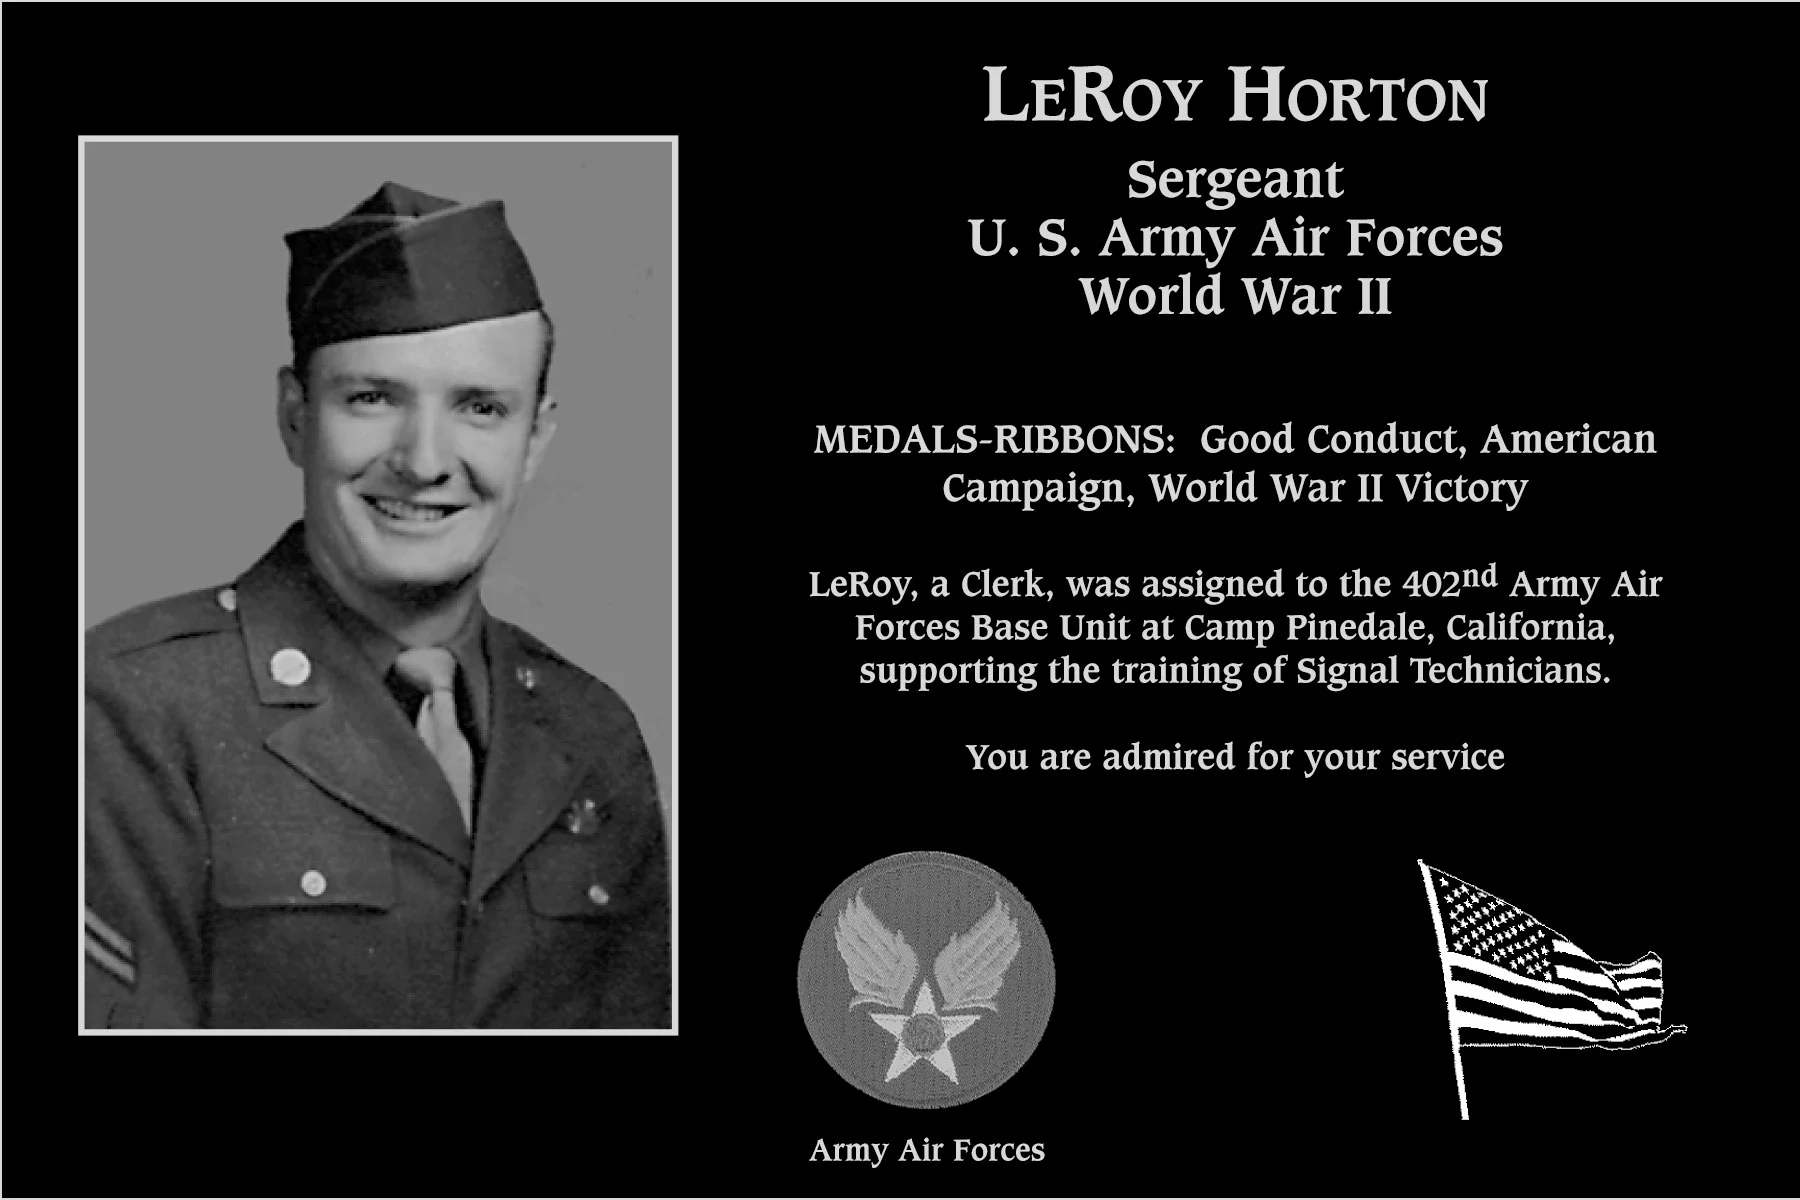 LeRoy Horton